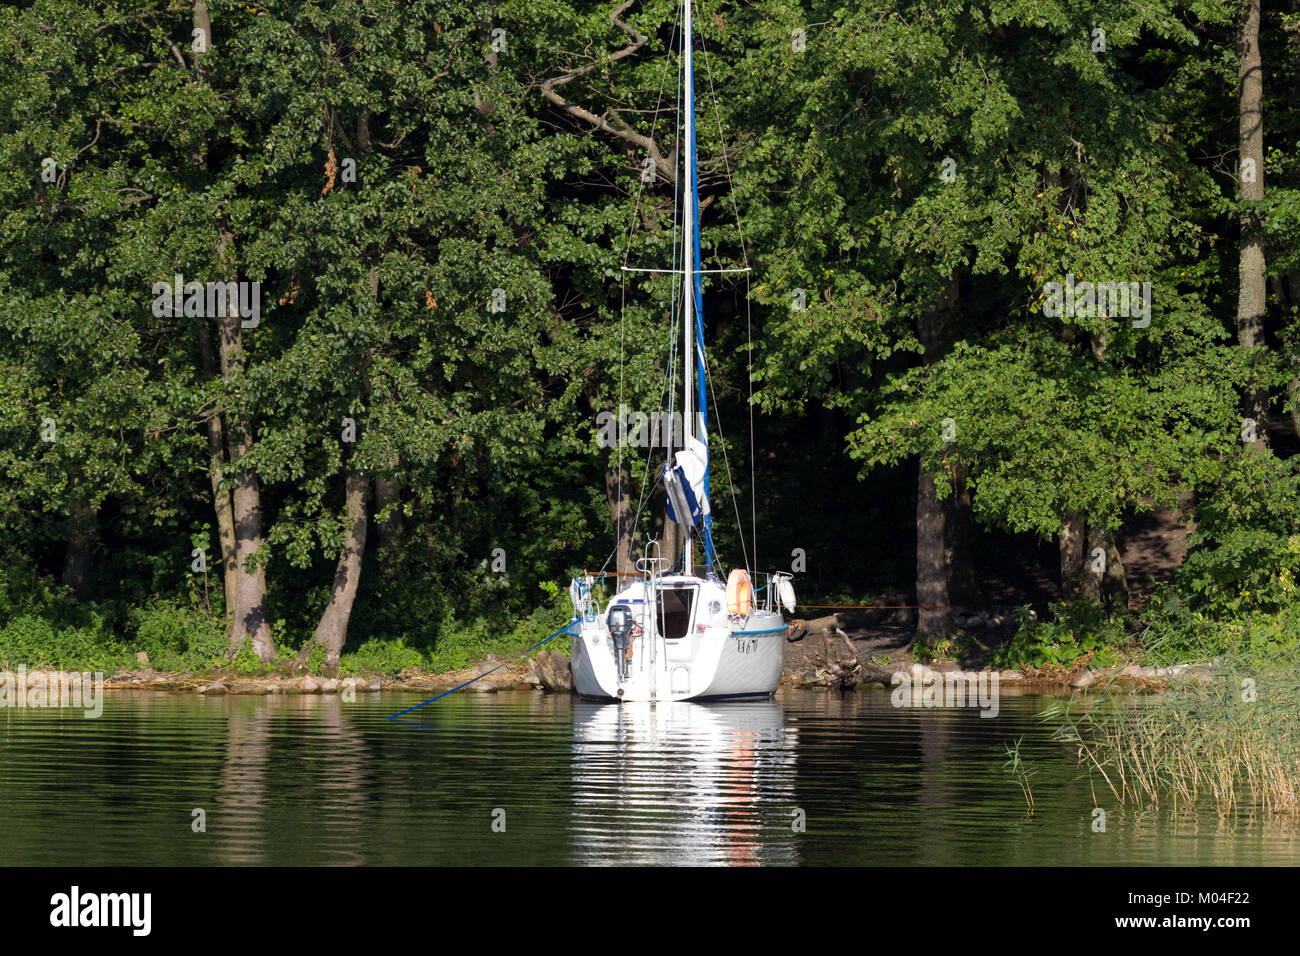 Boat on Lake Mamry, Masuria, Poland Stock Photo